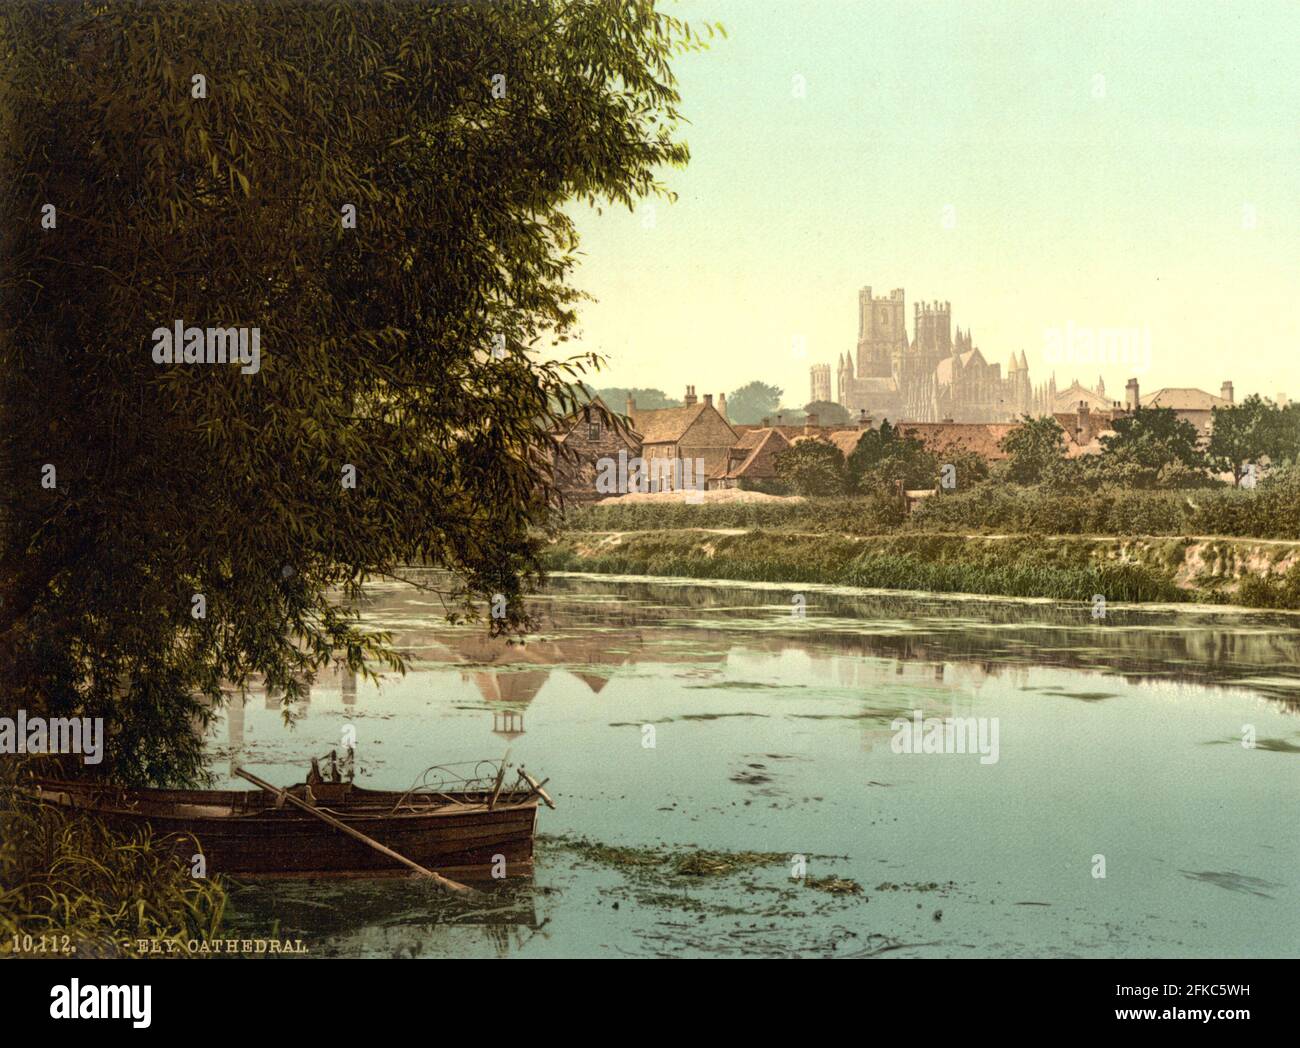 Ely Kathedrale und der Fluss Great Ouse um 1890-1900 Stockfoto